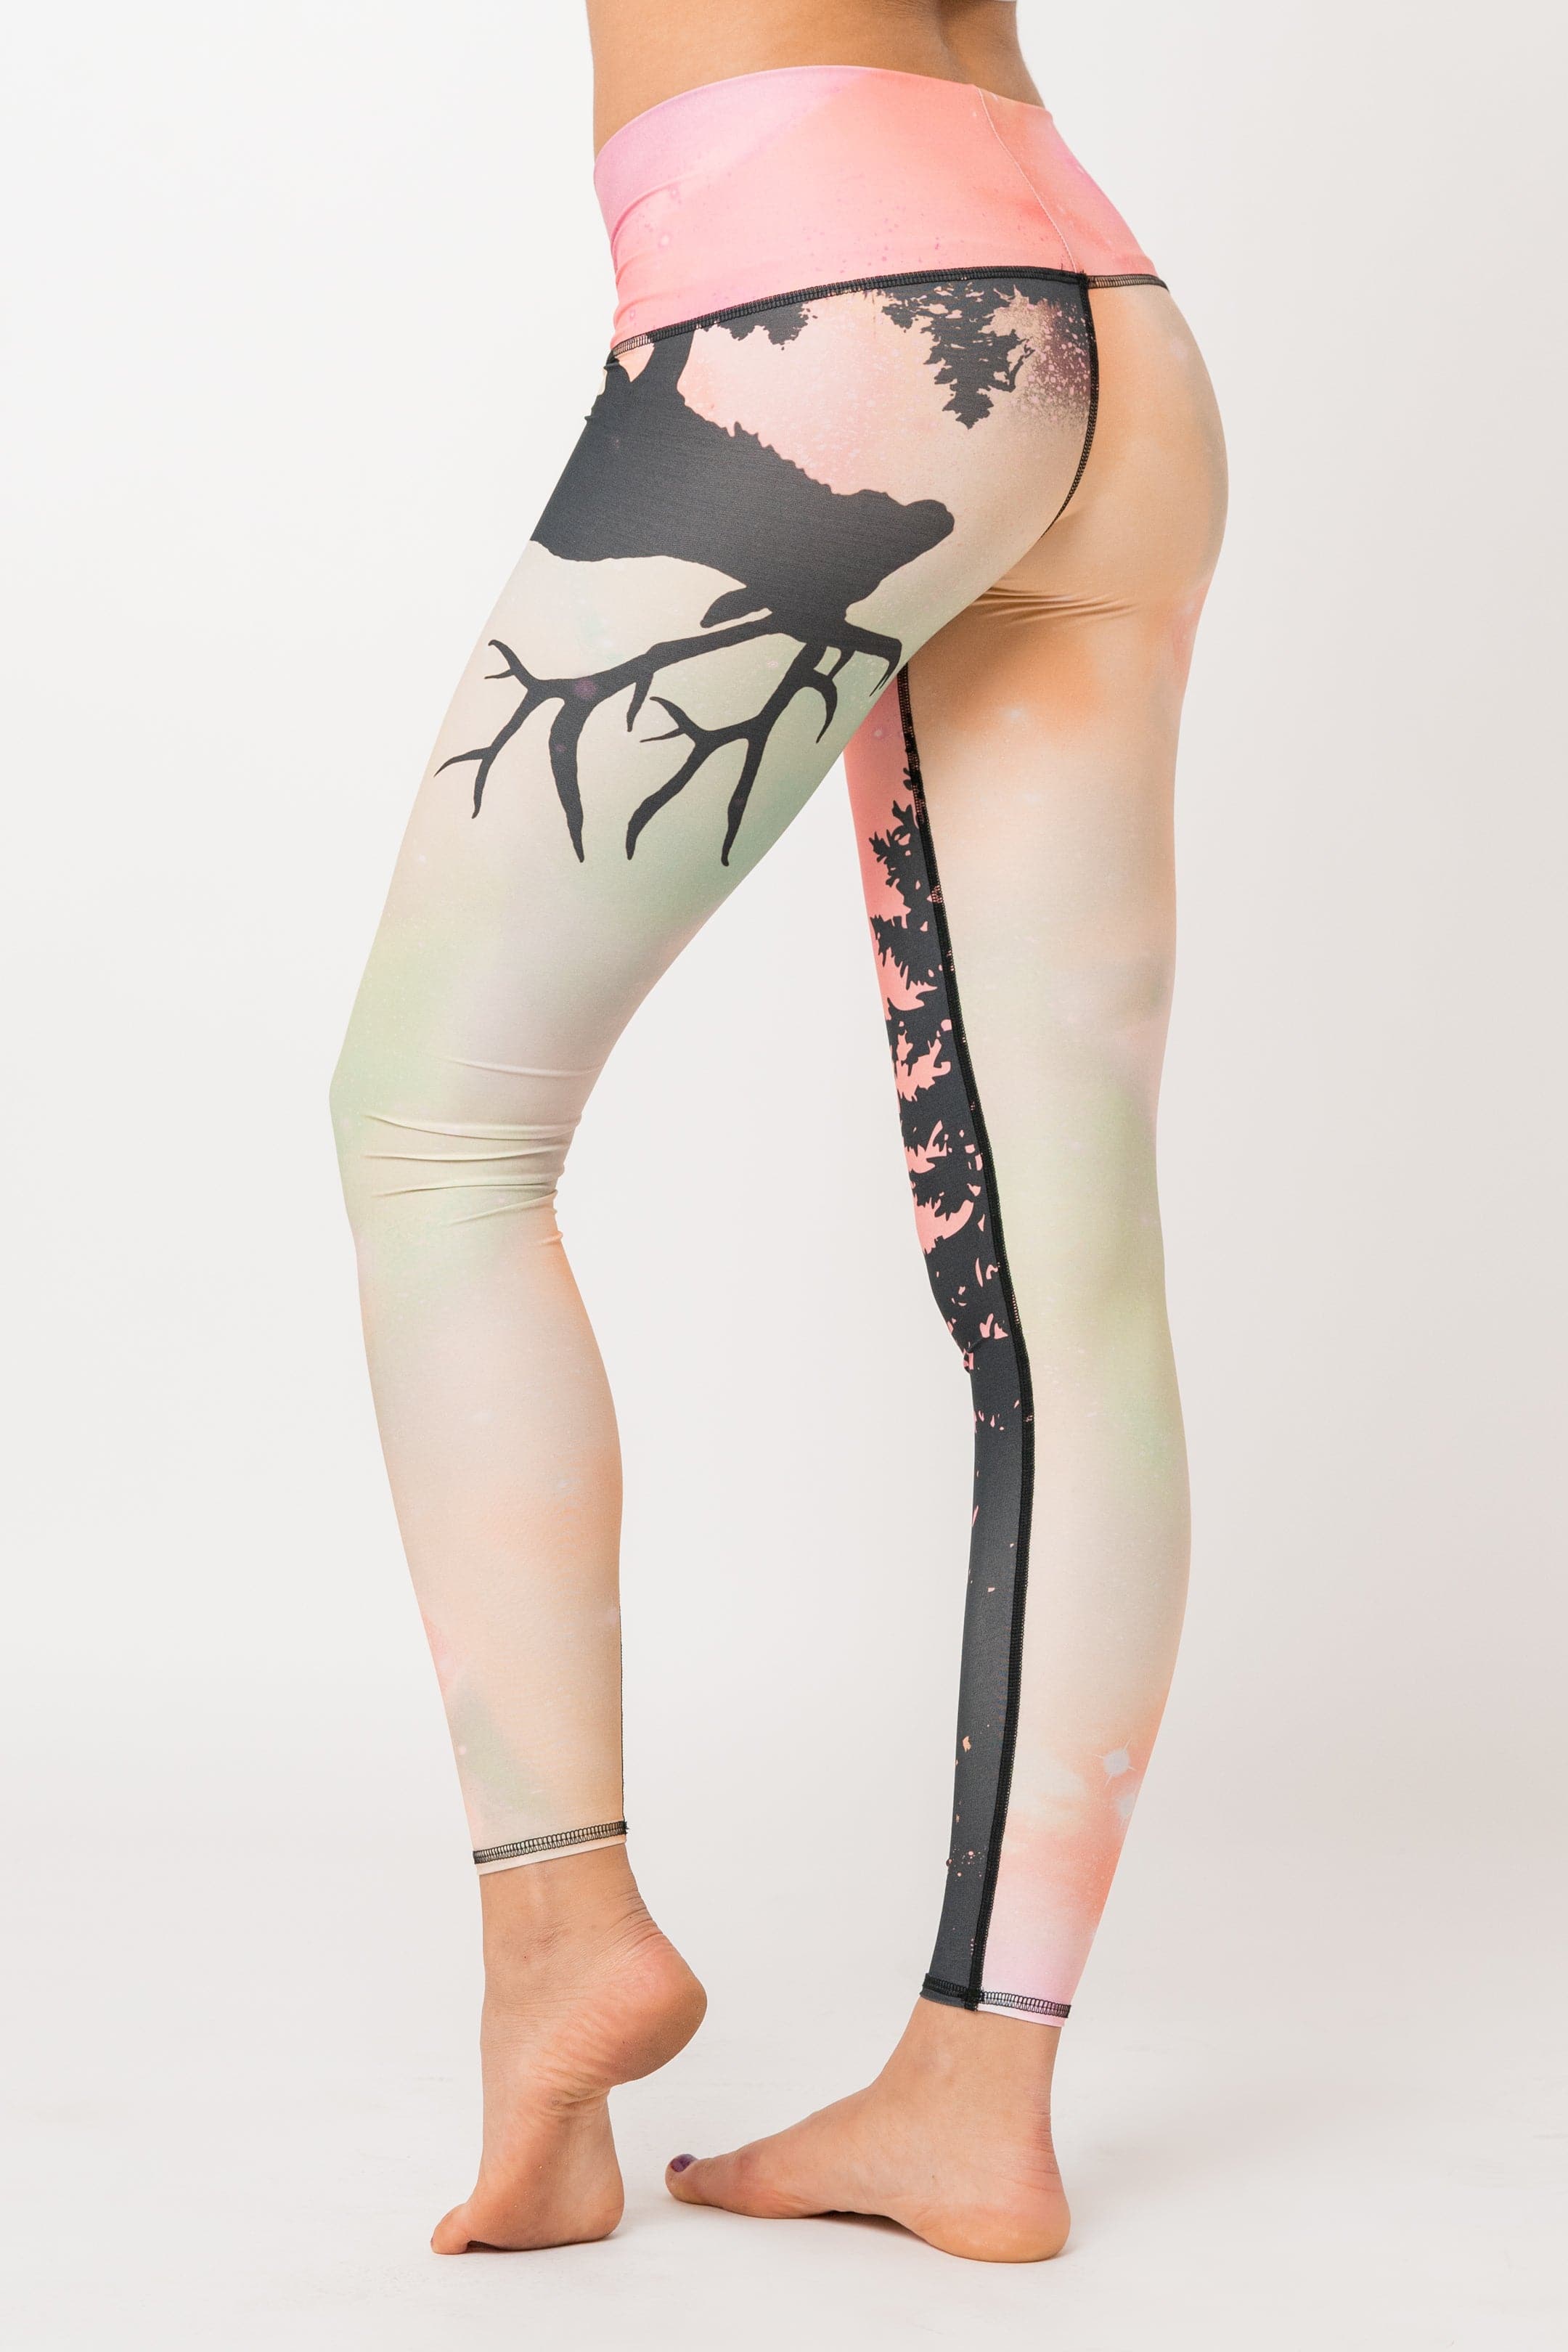 Northern Lights Hot Pant by teeki - womens yoga leggings bottoms